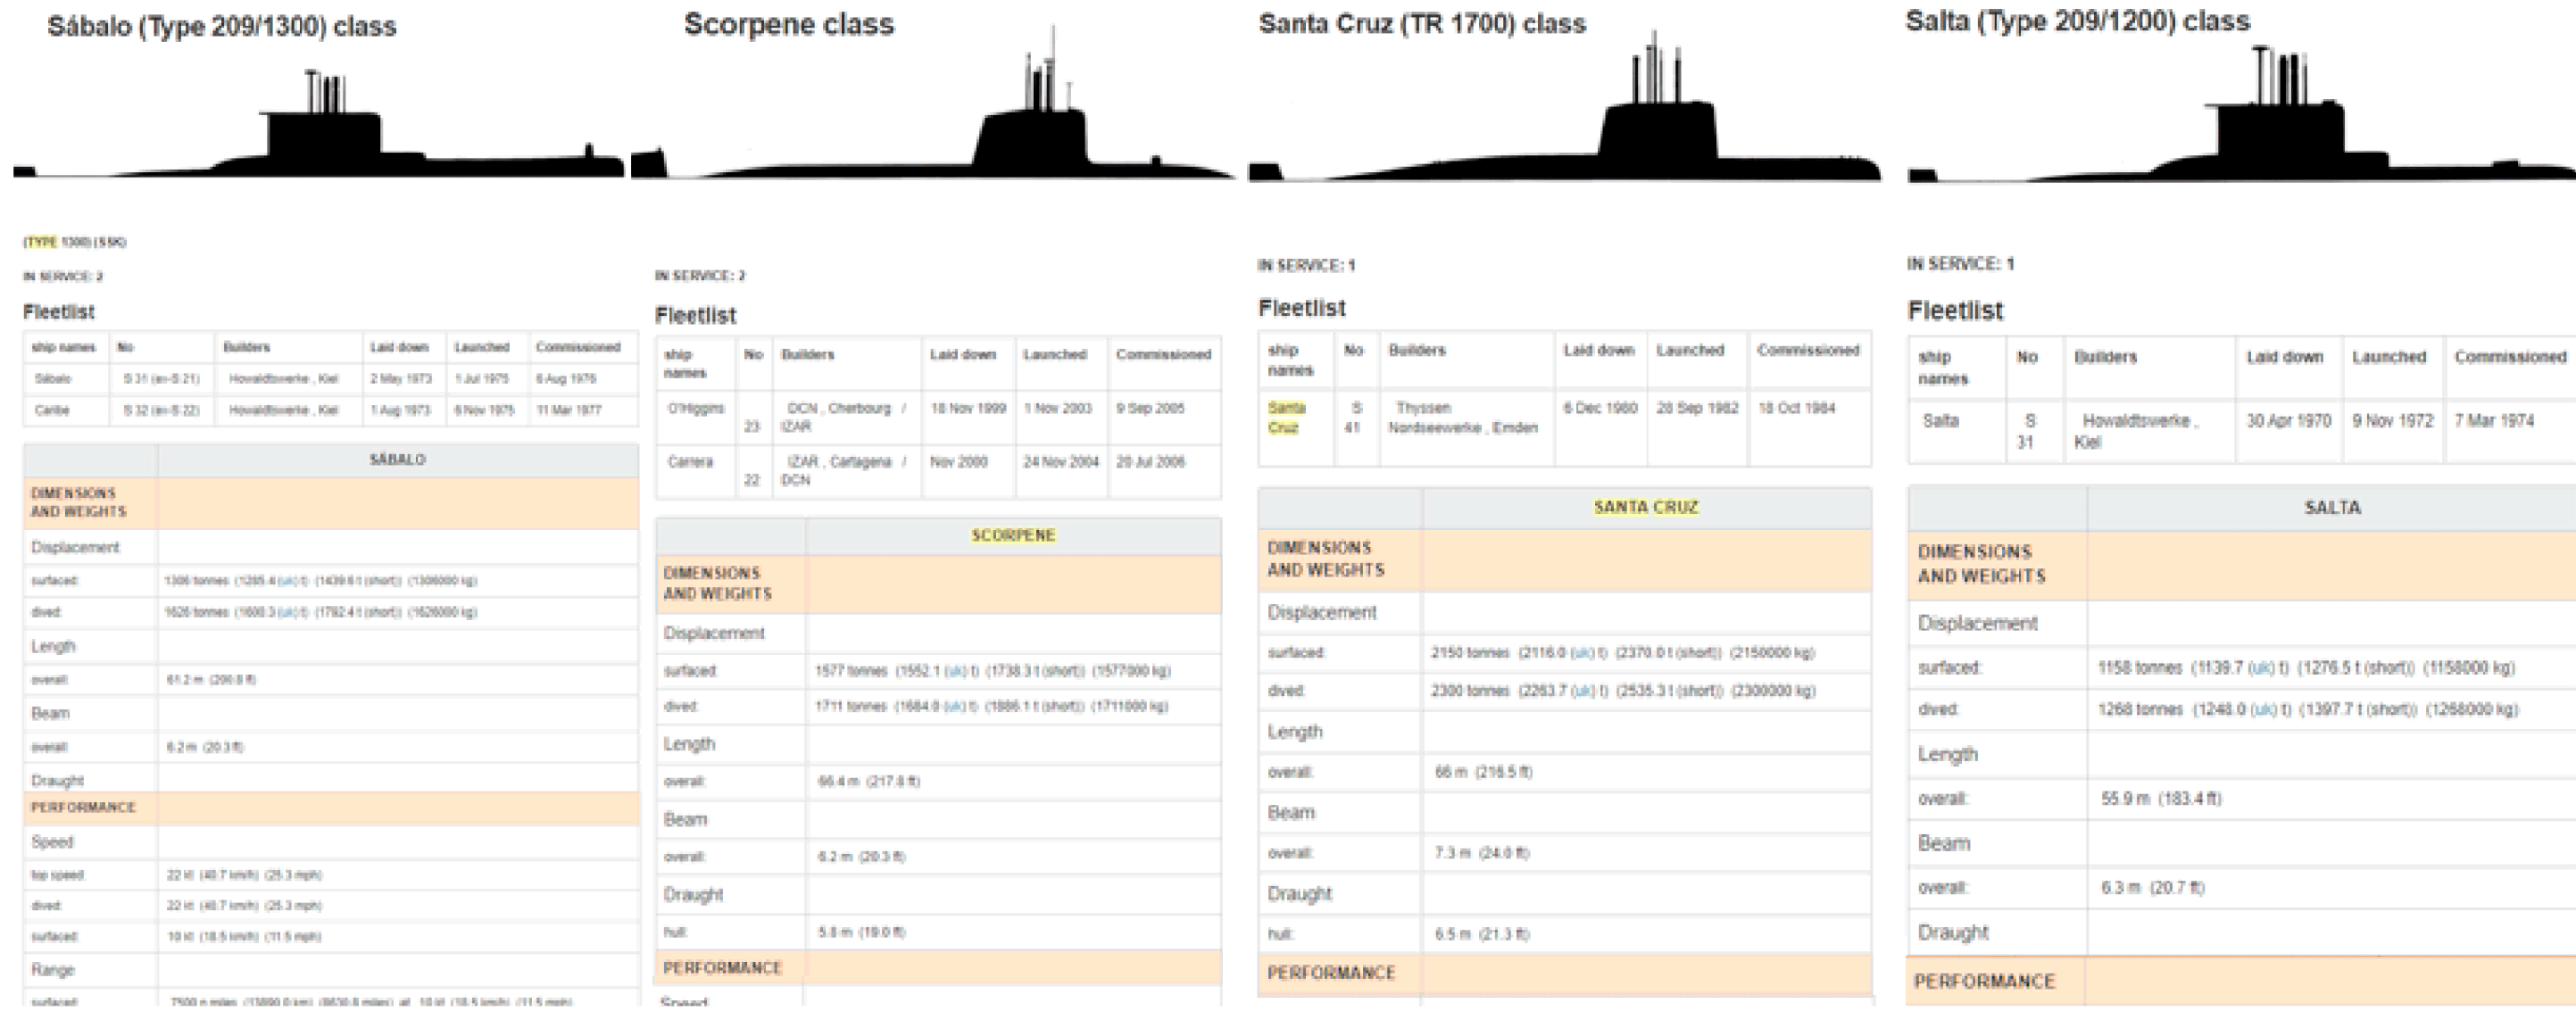 Image of military ship platform comparison